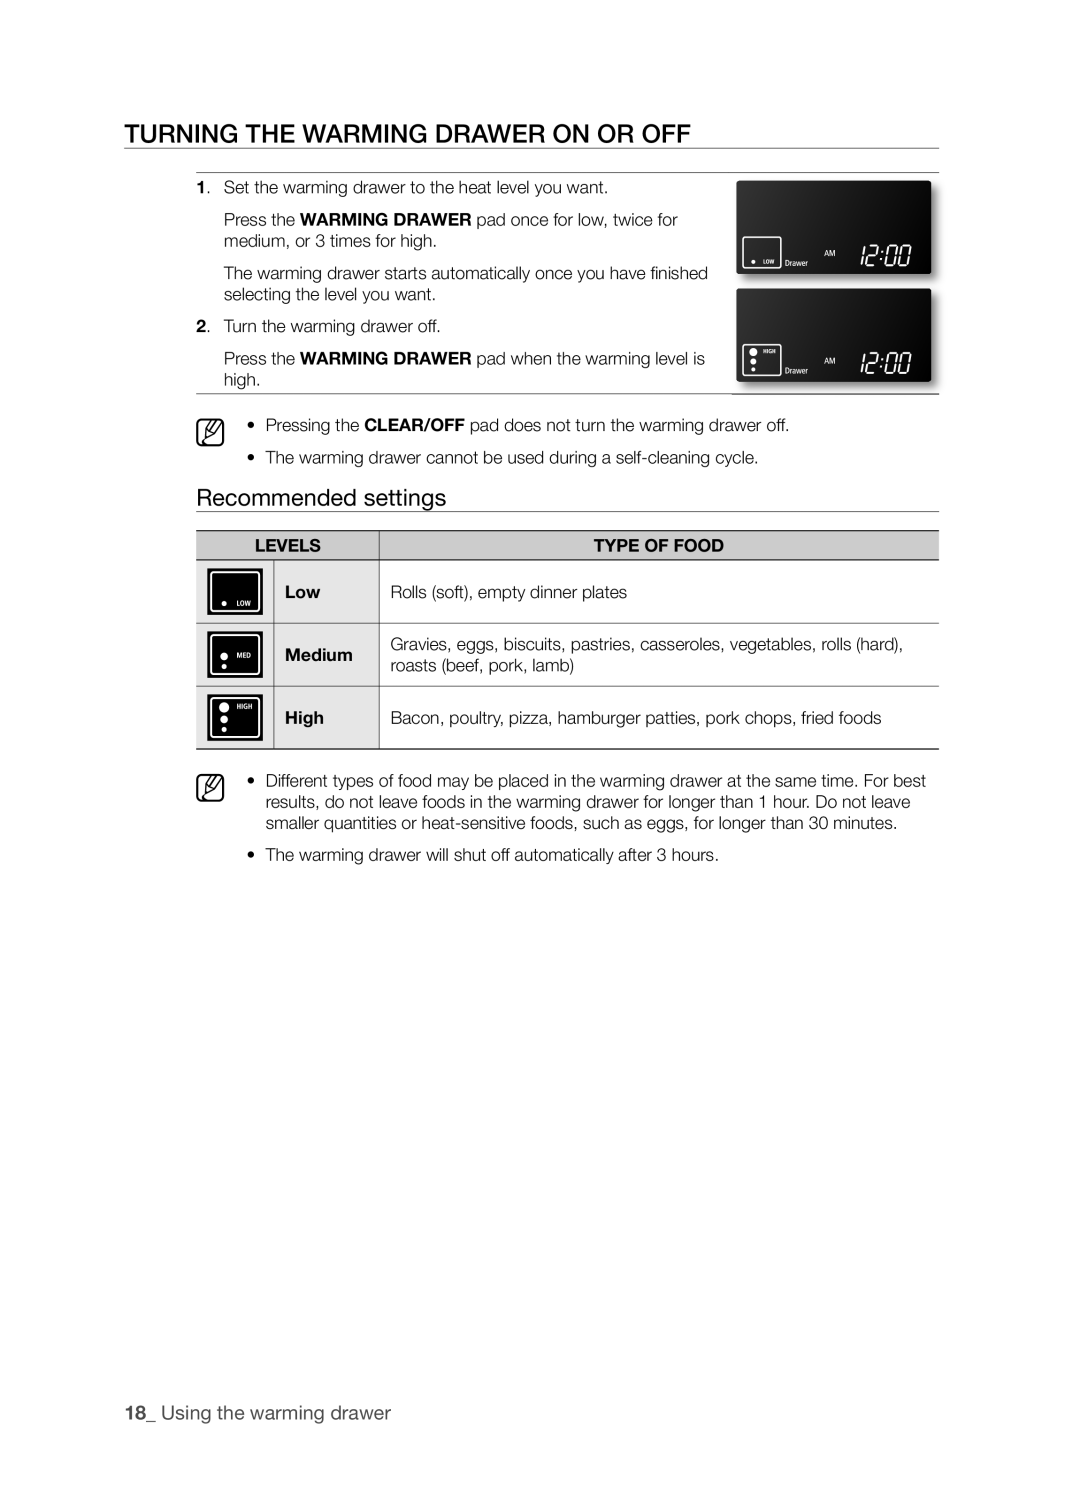 Samsung FTQ386LWUX user manual Turning The Warming Drawer On Or Off, 1 Using the warming drawer, Recommended settings 